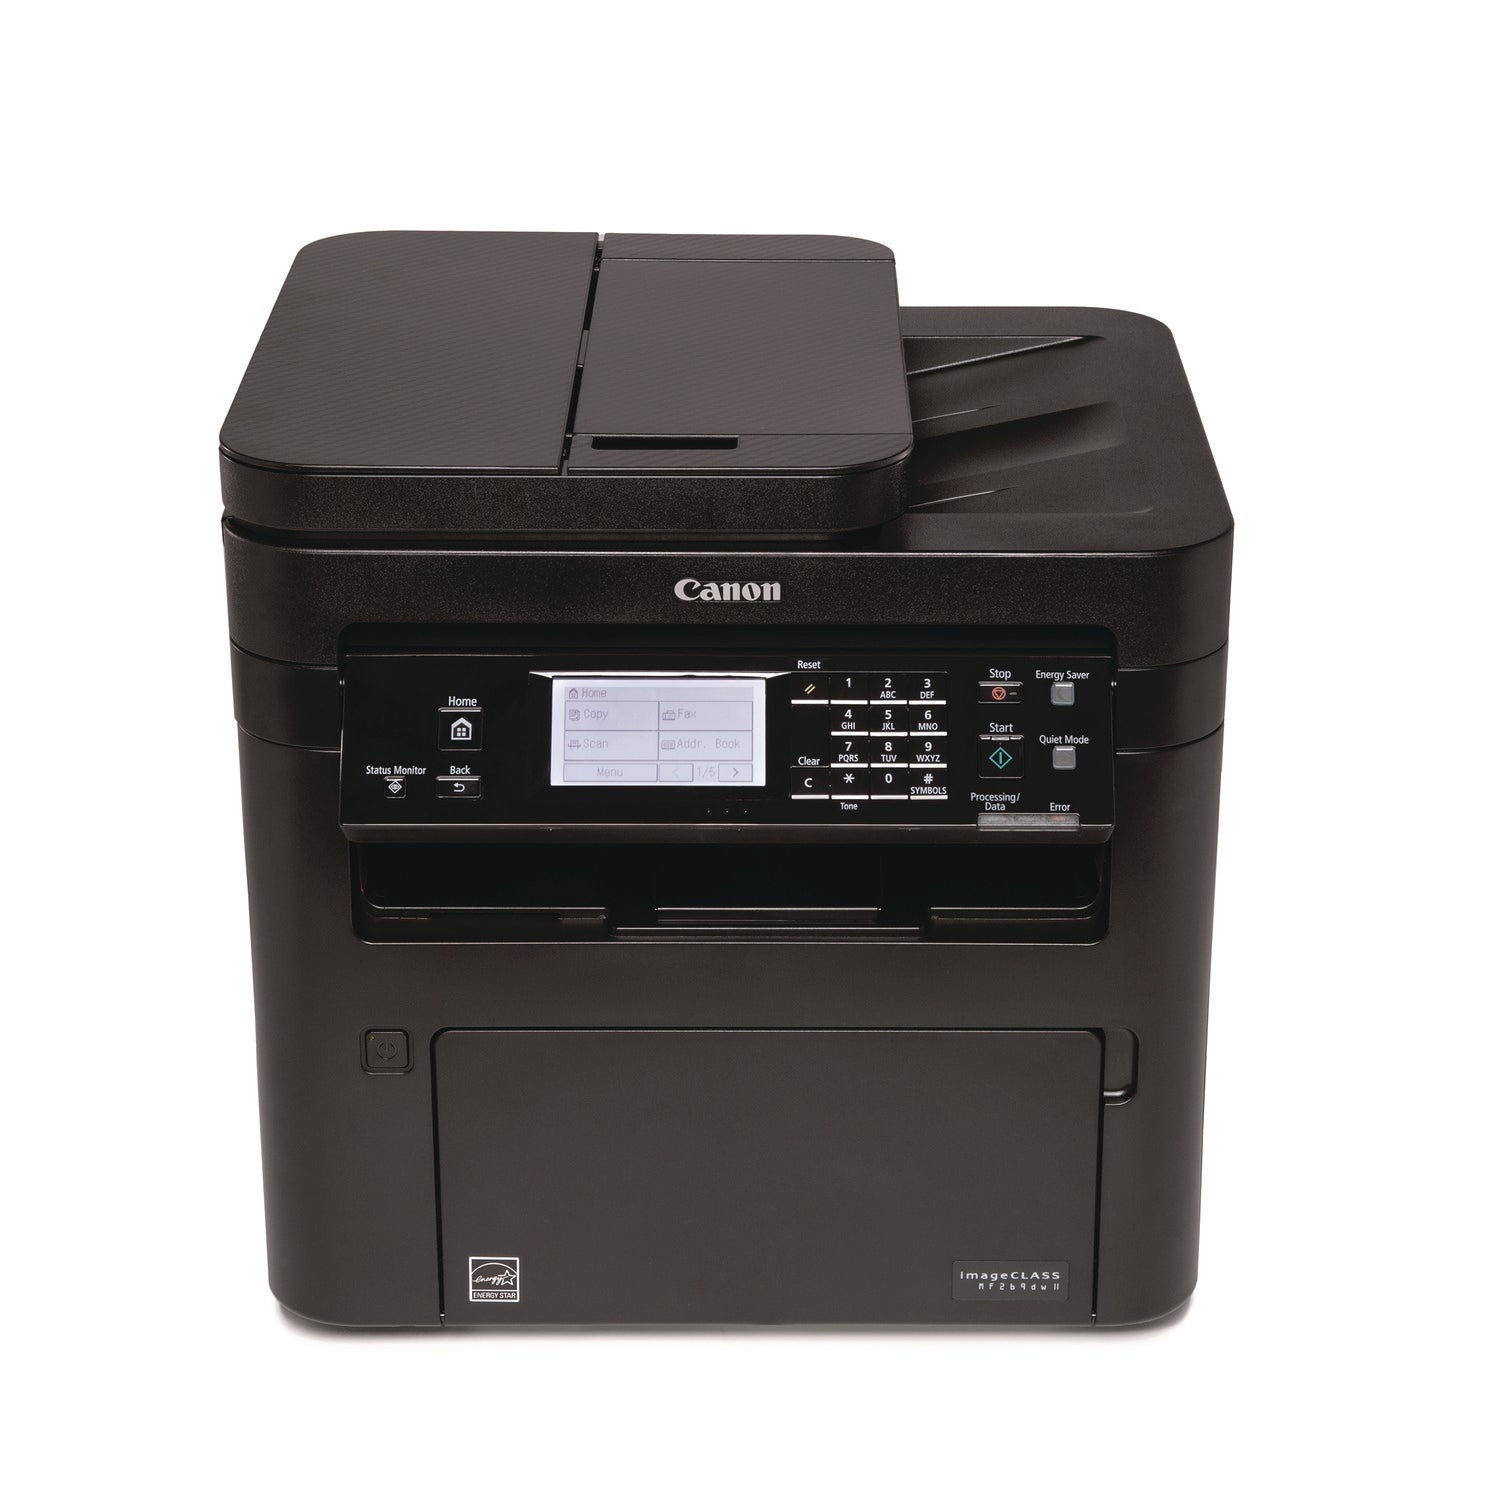 imageclass-mf269dw-ii-vp-wireless-multifunction-laser-printer-copy-fax-print-scan_cnm5938c001 - 2